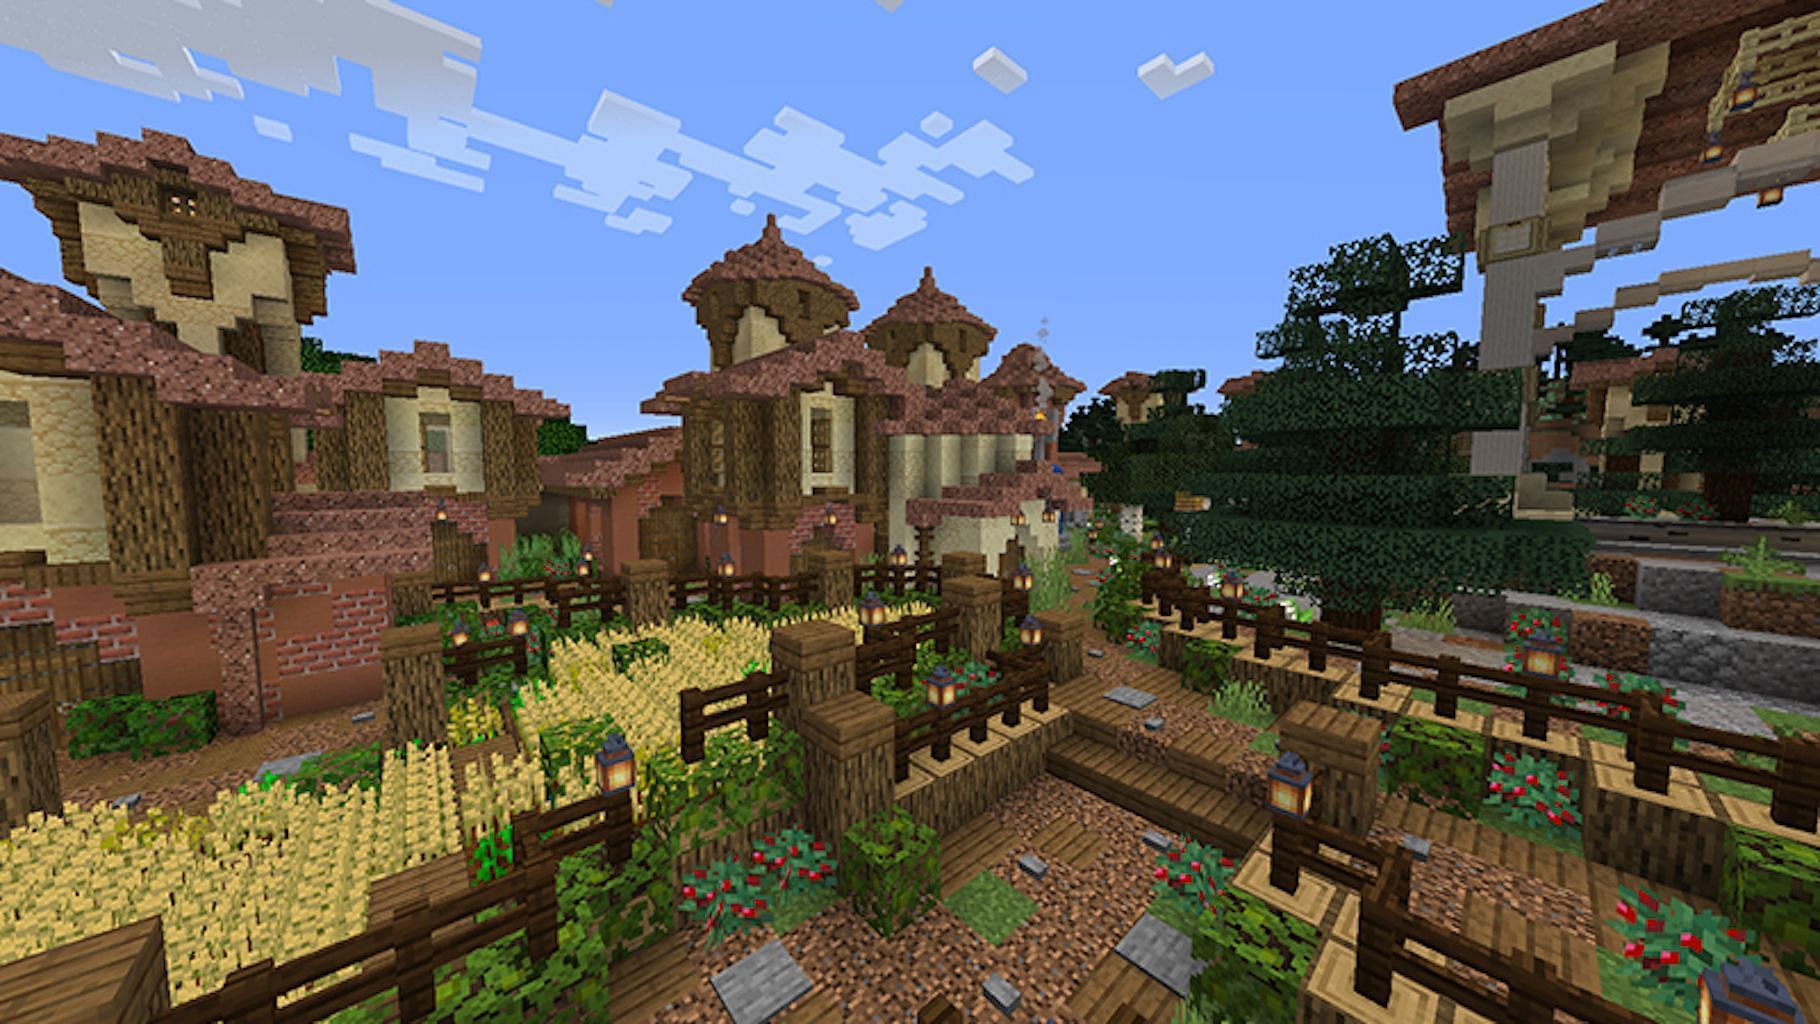 Minecraft village [Image via Minecraft]